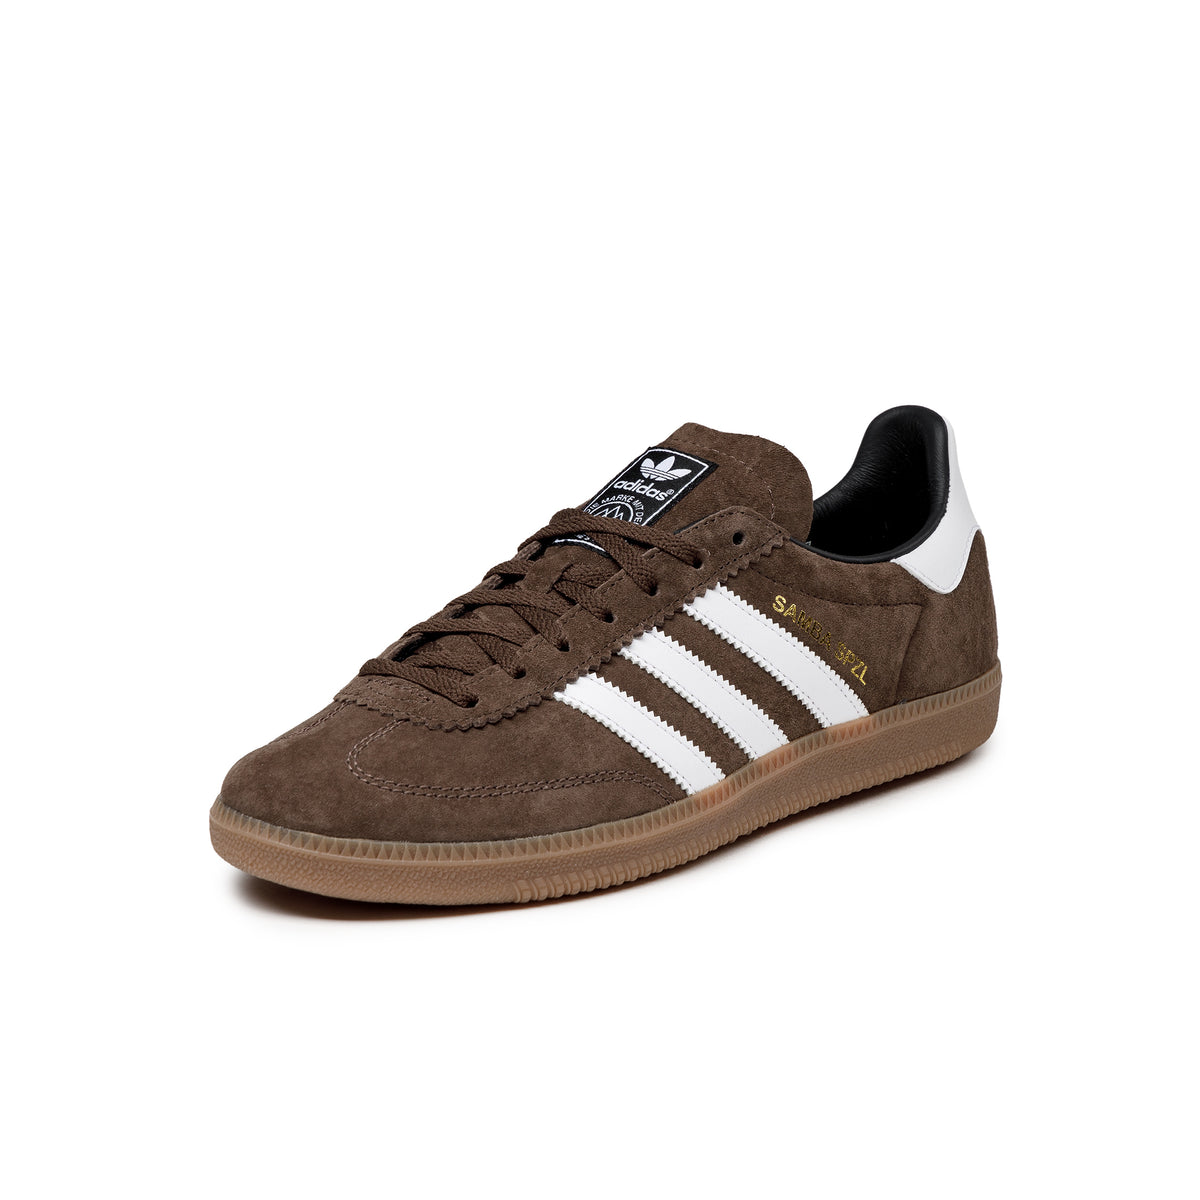 Adidas SPZL Samba *Deco* » Buy online now!